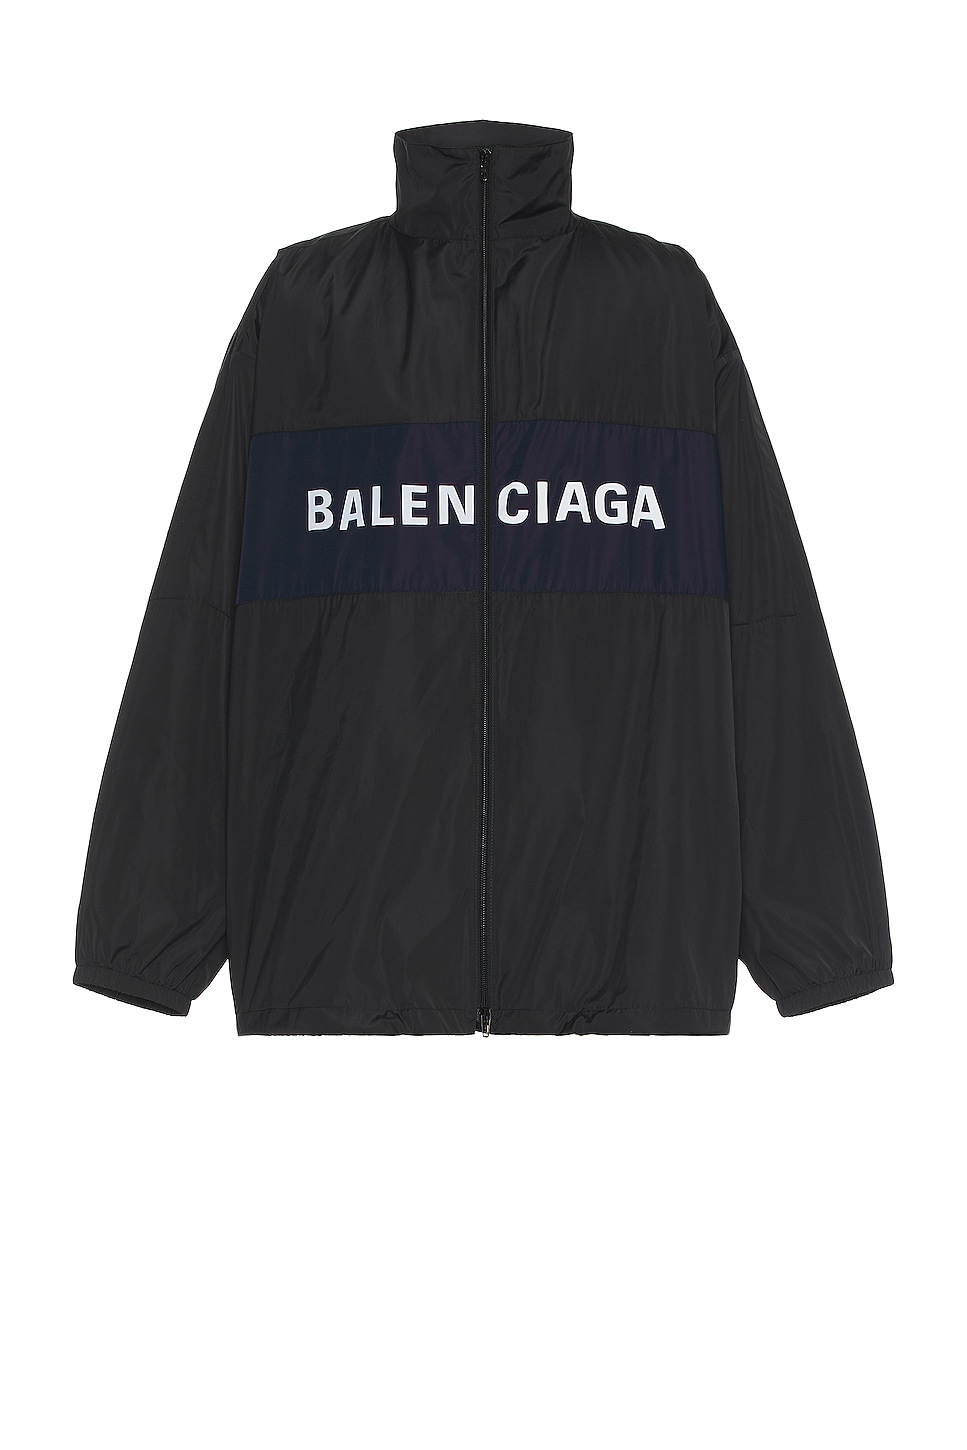 Image 1 of Balenciaga Logo Zip Up Jacket in Black